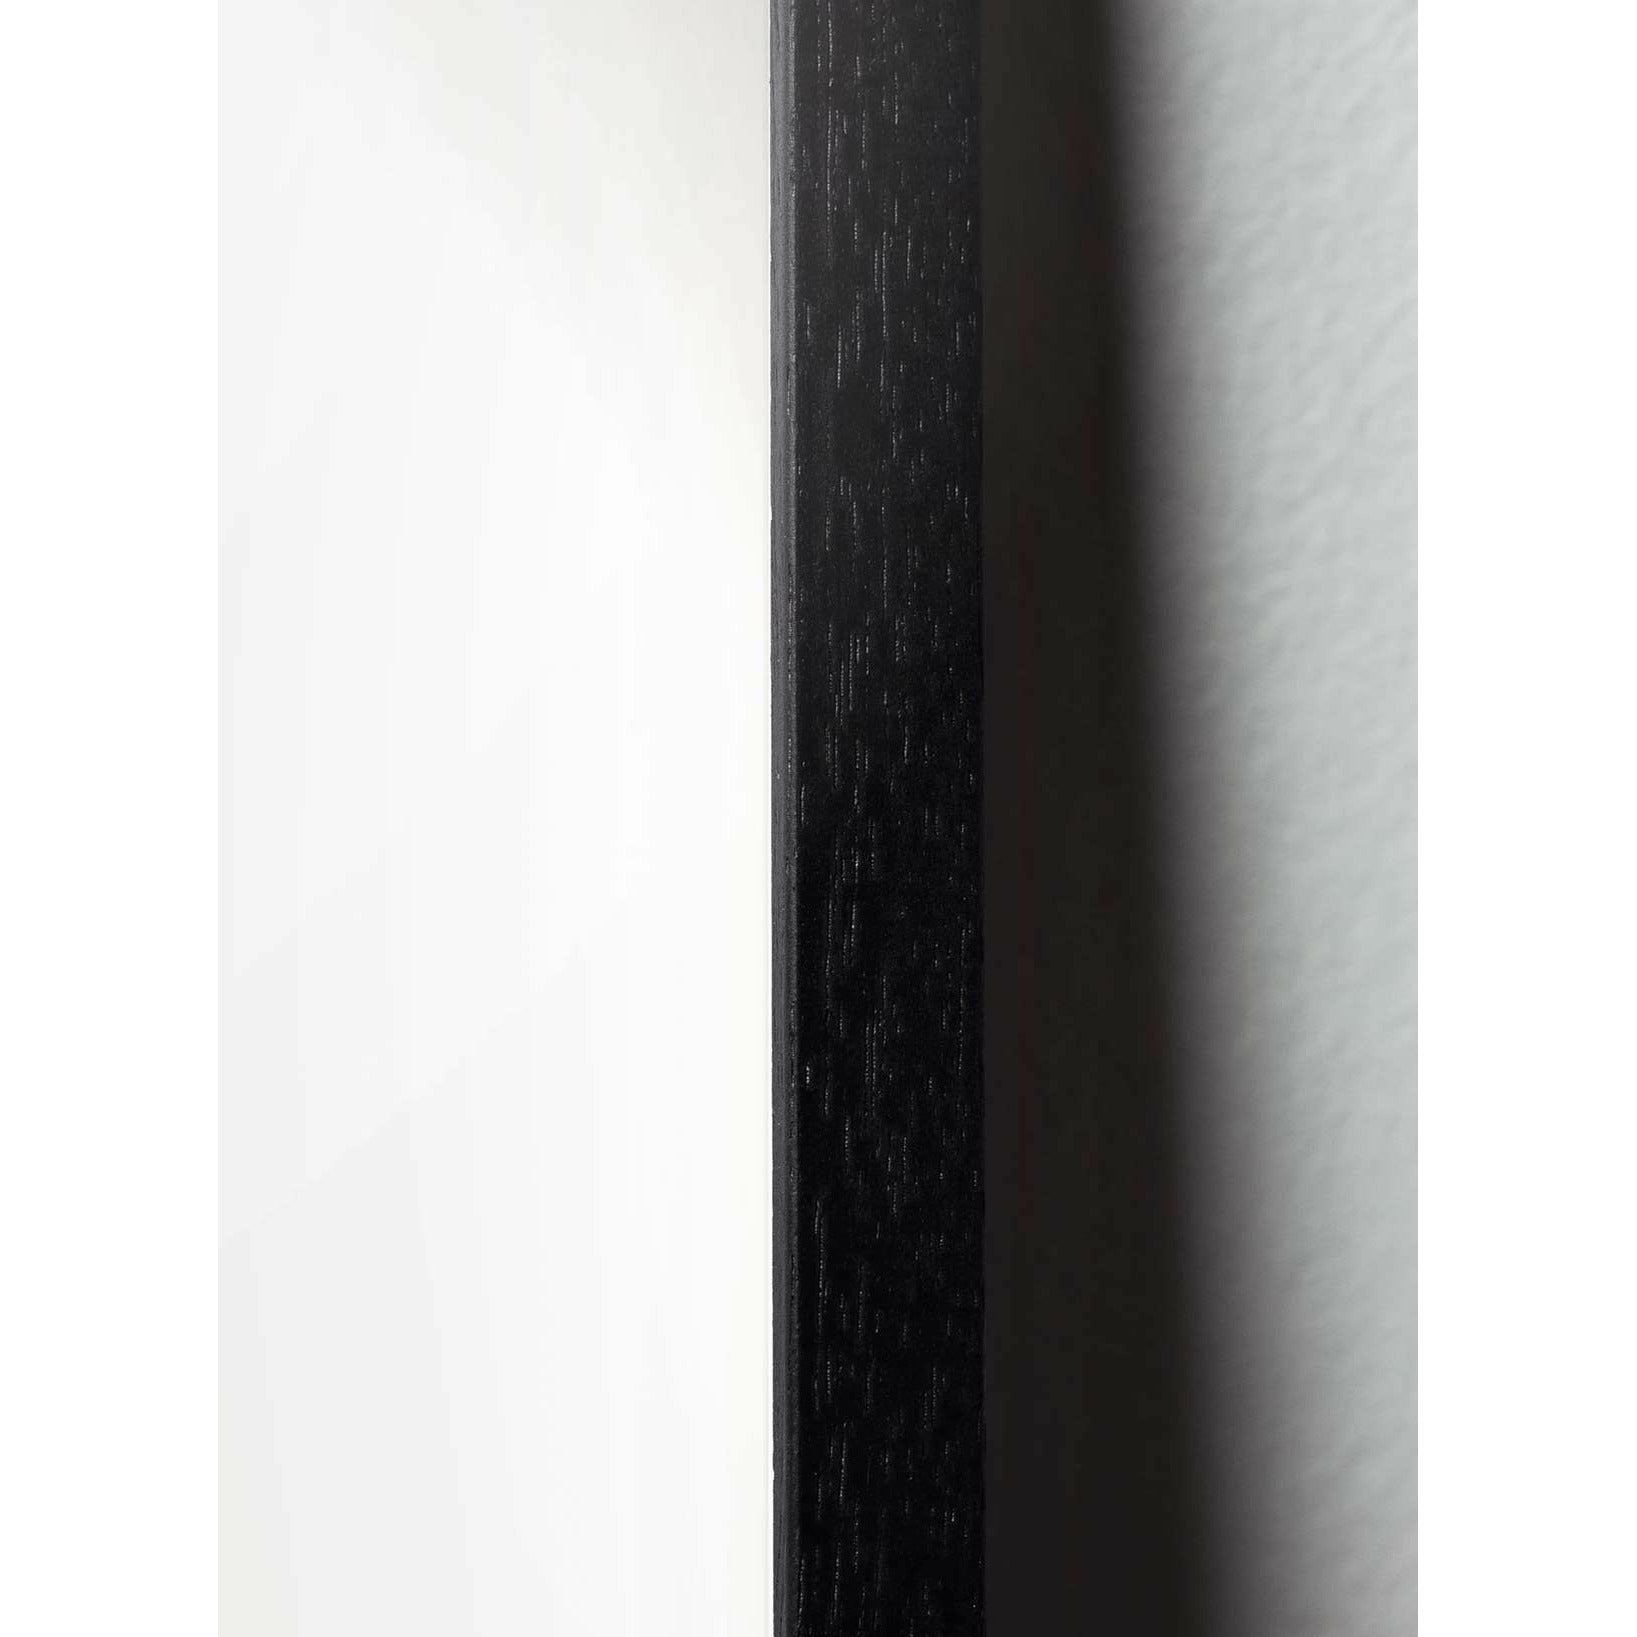 Póster de icono de diseño de caída de creación, marco hecho de madera lacada negra 50 x70 cm, gris